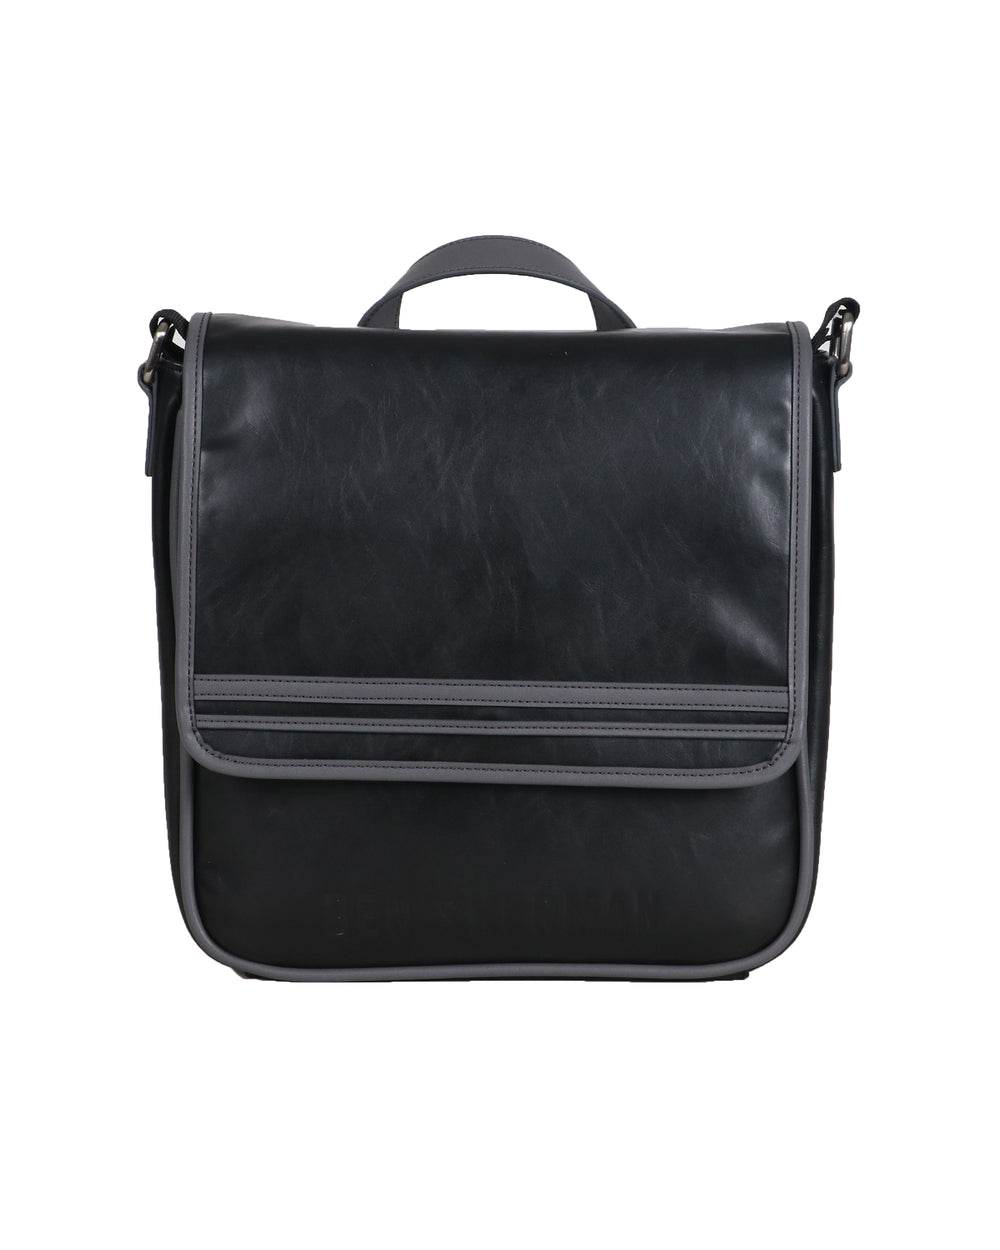 Faux Leather Flapover Crossbody Tablet Bag - Black/Charcoal - Ben Sherman